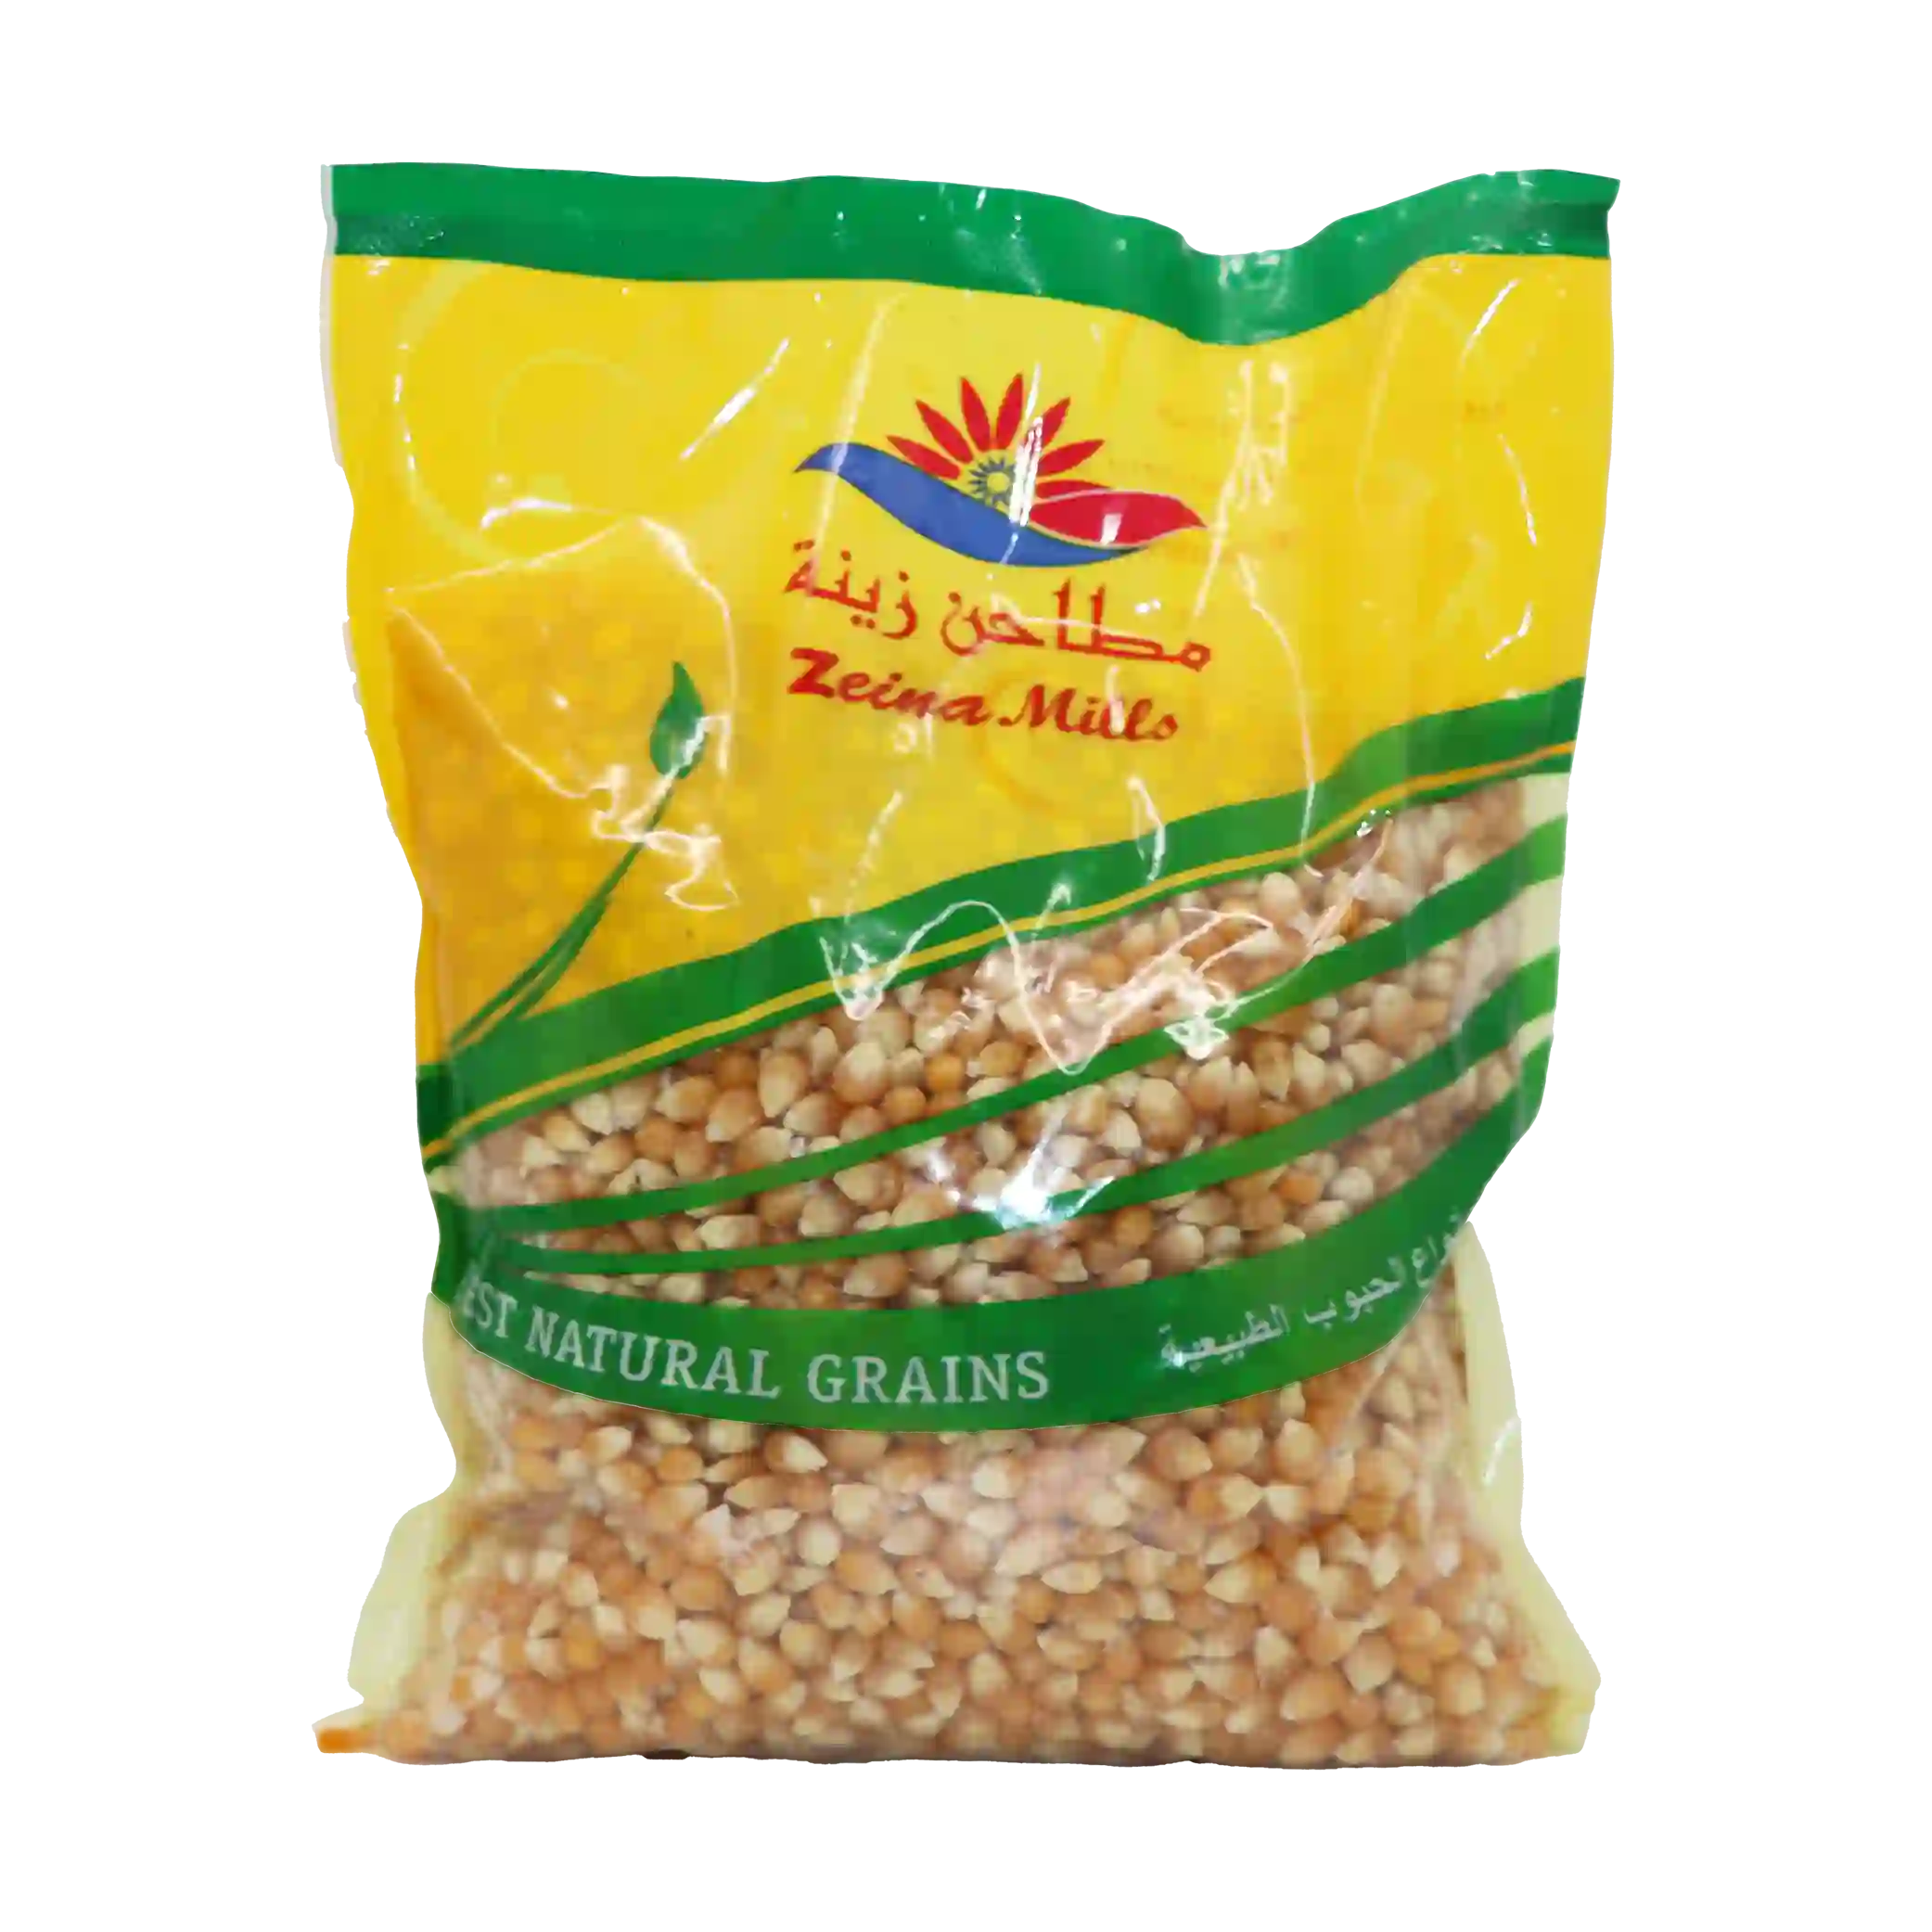 KAC - Popcorn corn - 1 kilo